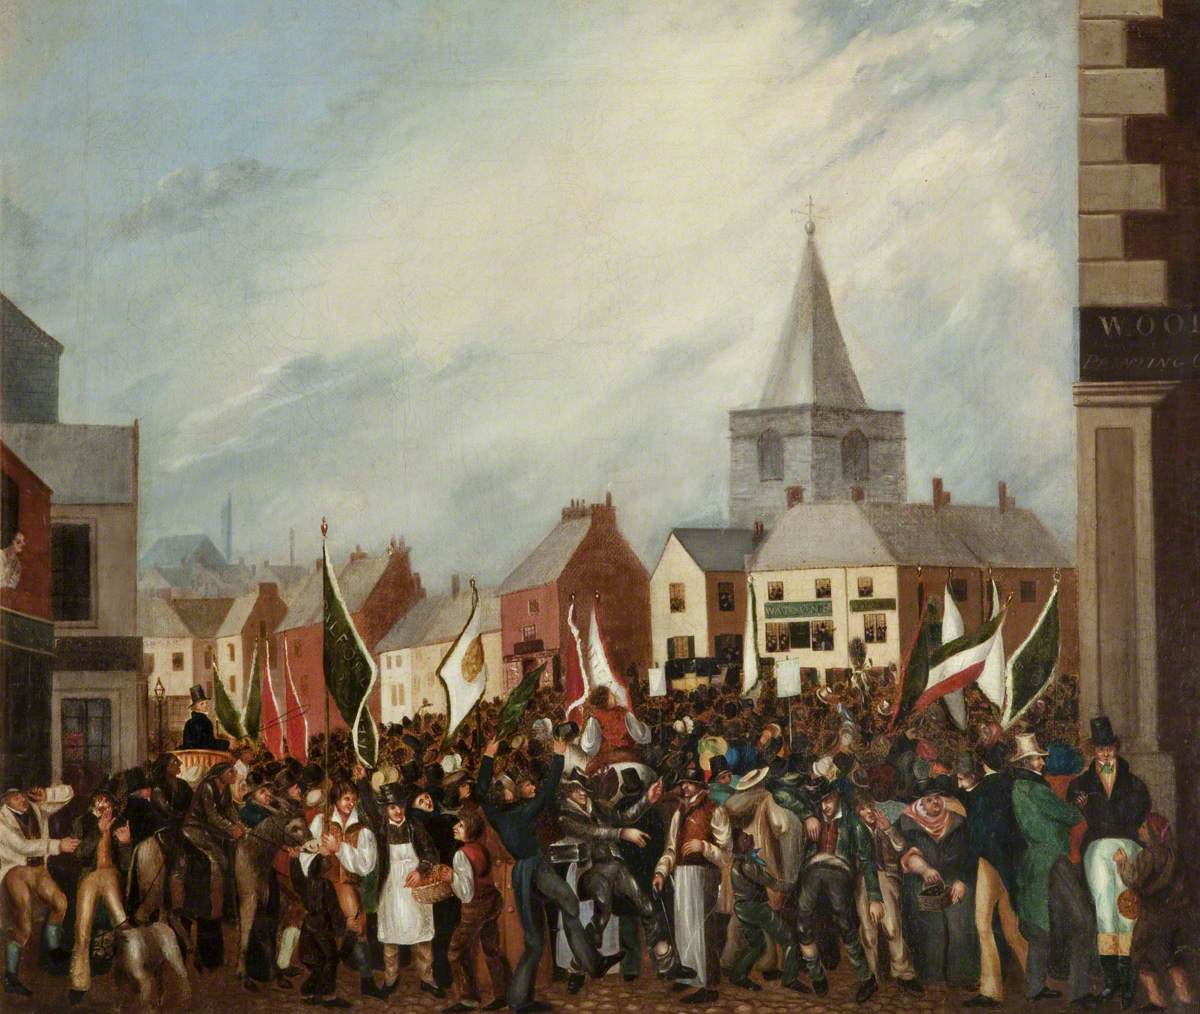 The 1832 Blackburn Election